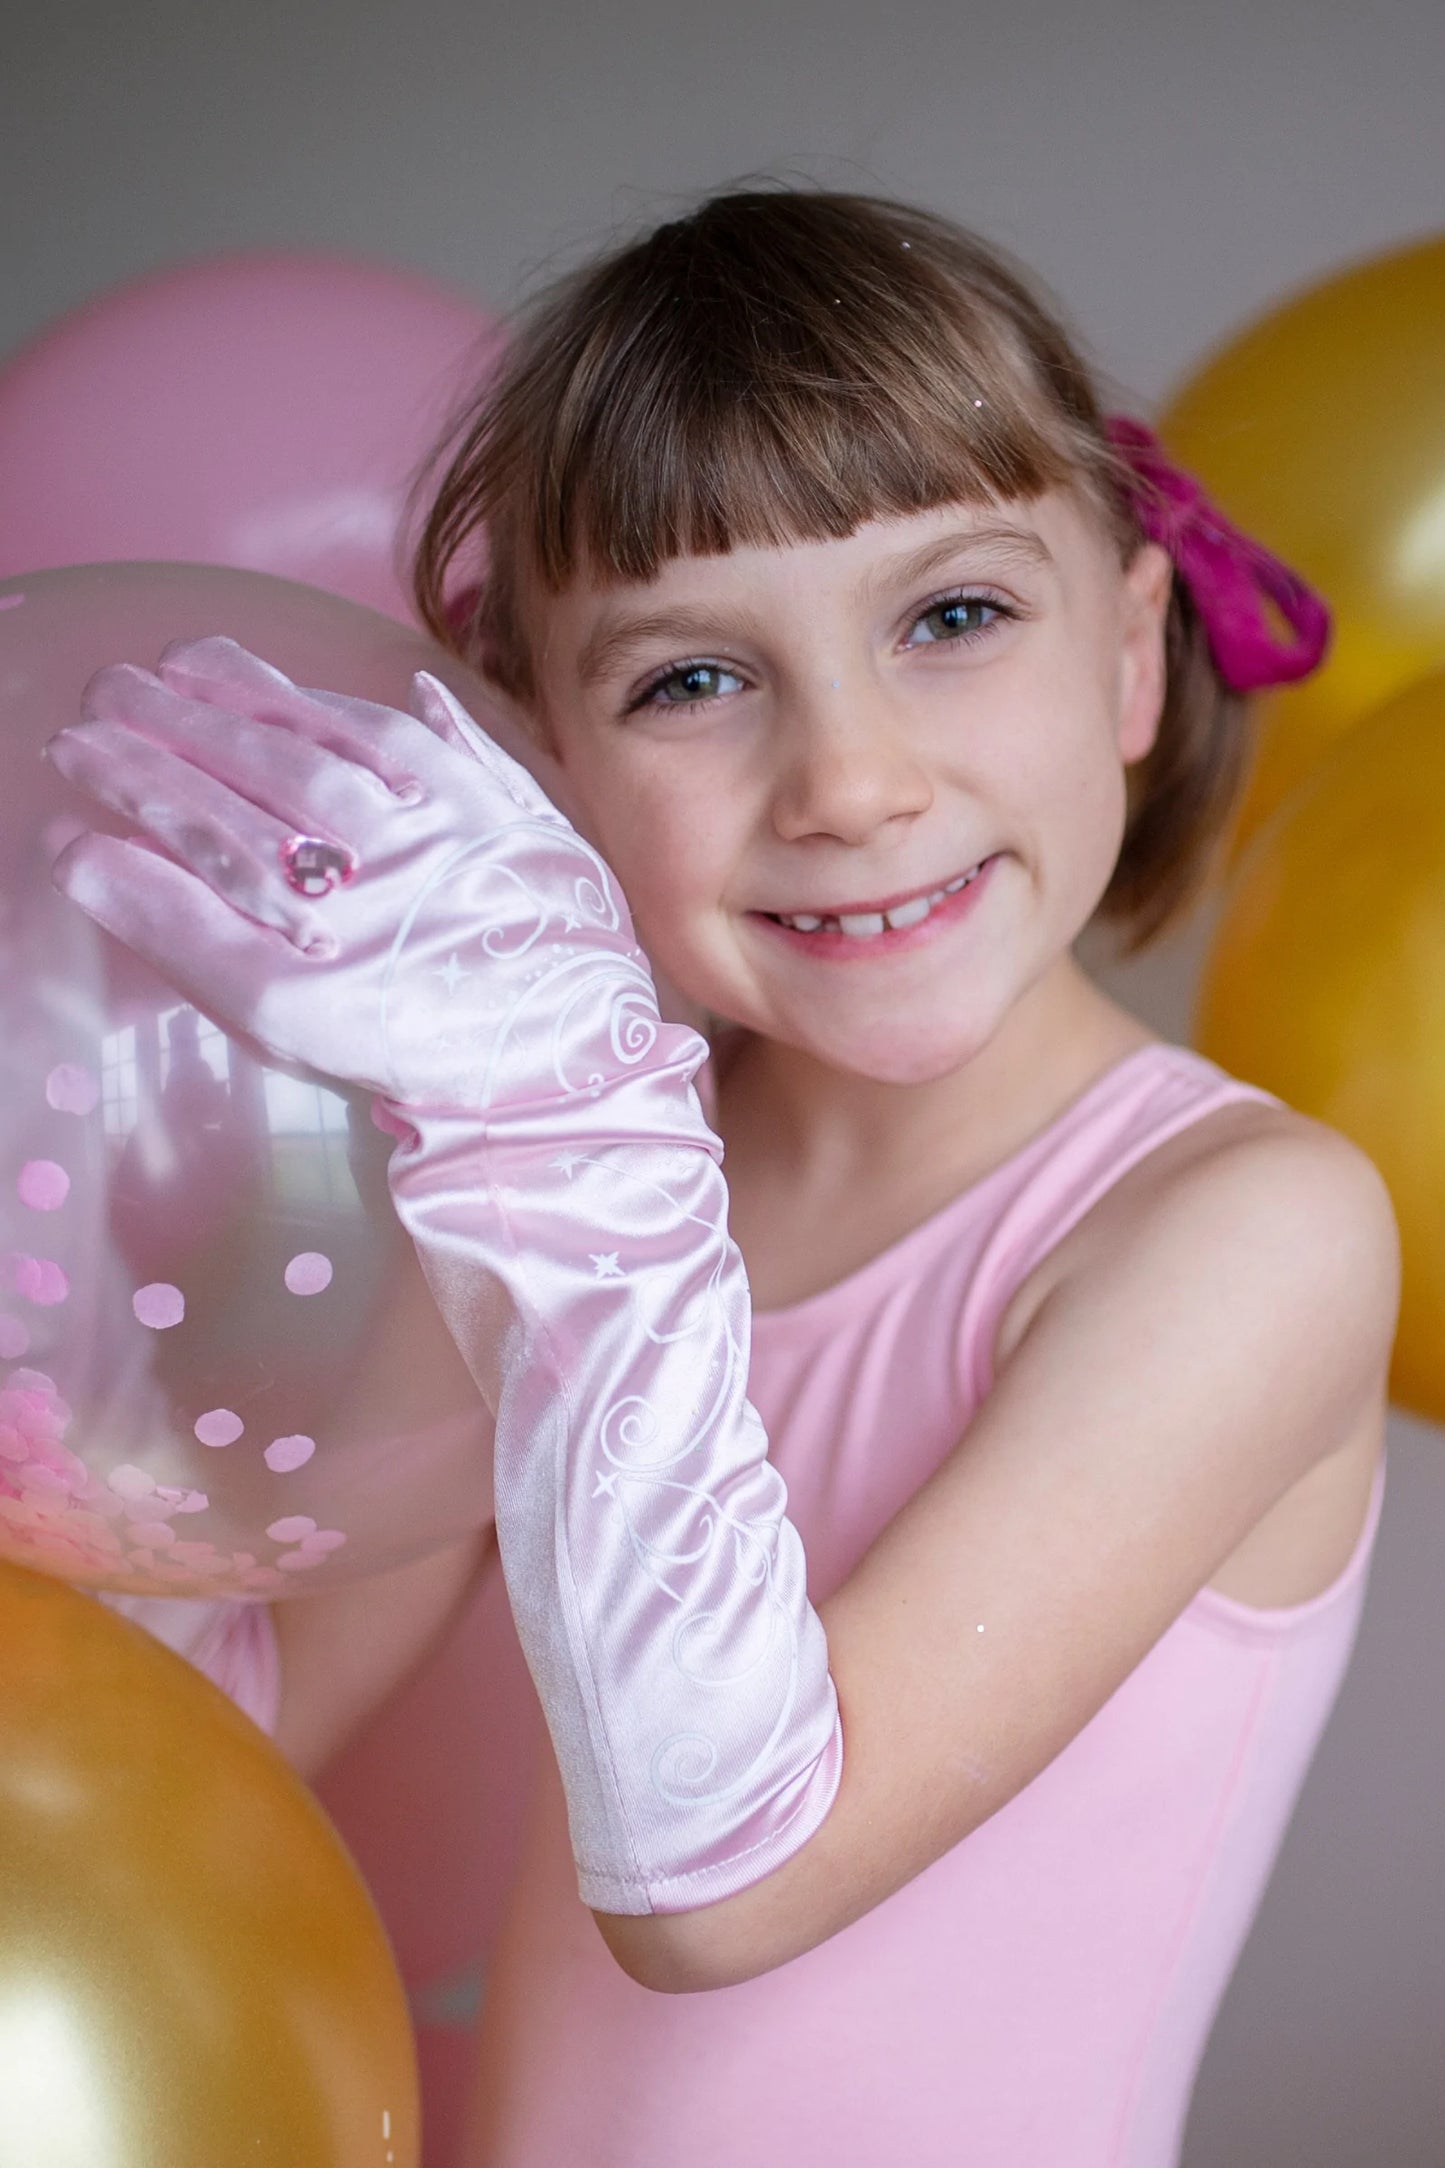 Dress Up - Princess Swirl Gloves (Light Pink)